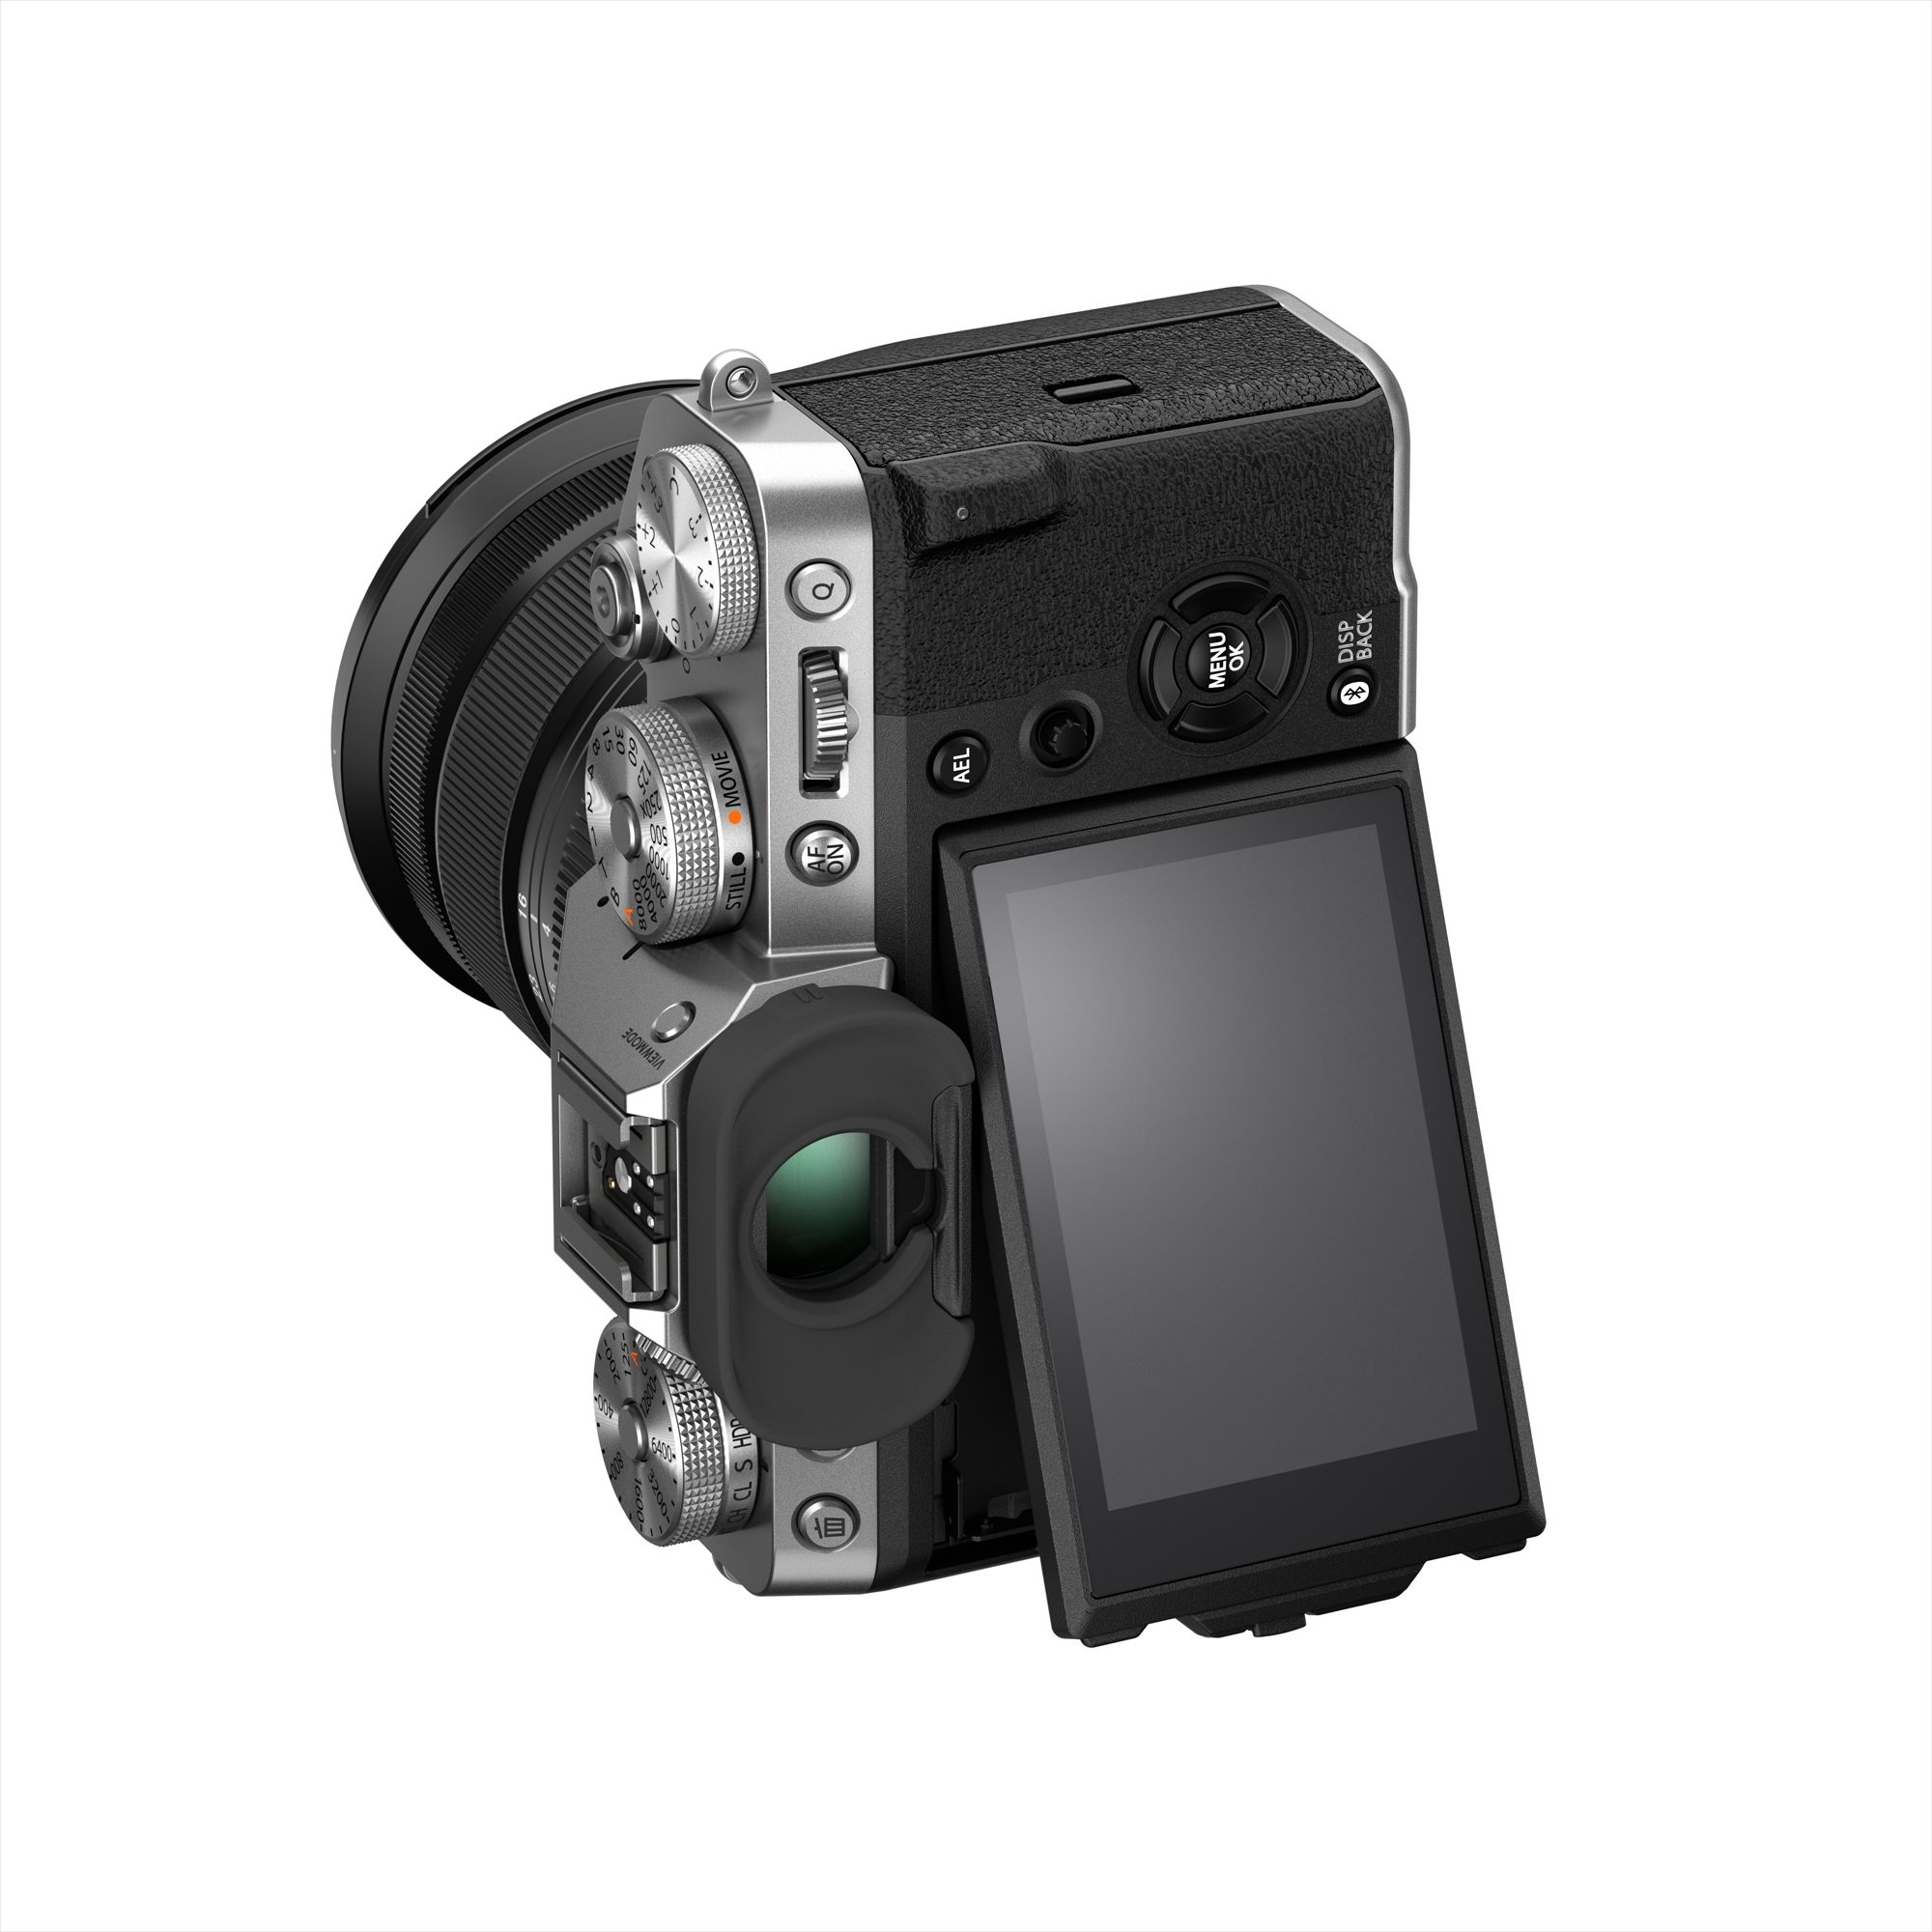 Fujifilm X-T5 Kit with XF 16-80mm lens (Silver)